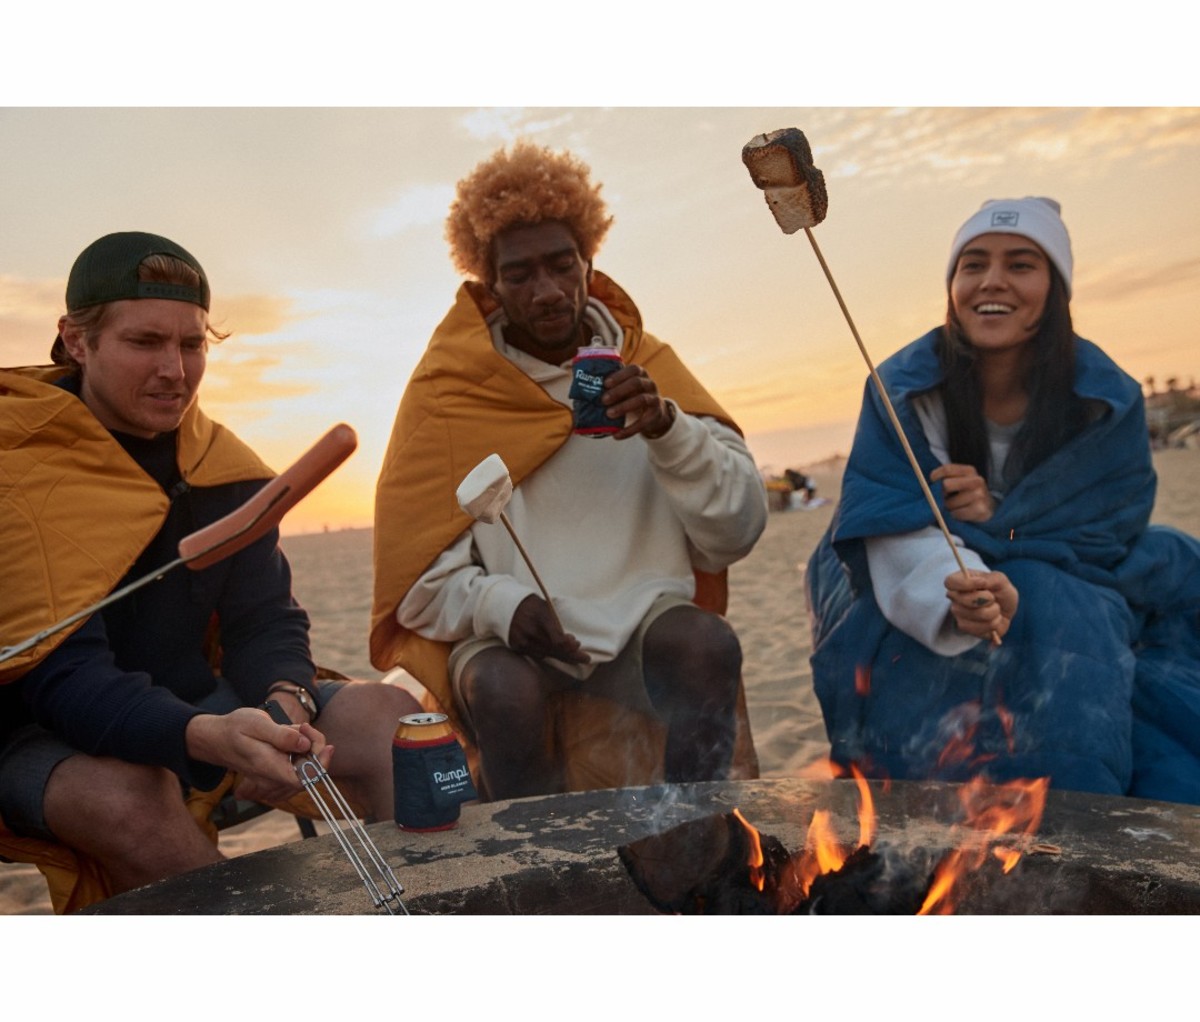 Two men and woman roasting marshmallows on beach bonfire